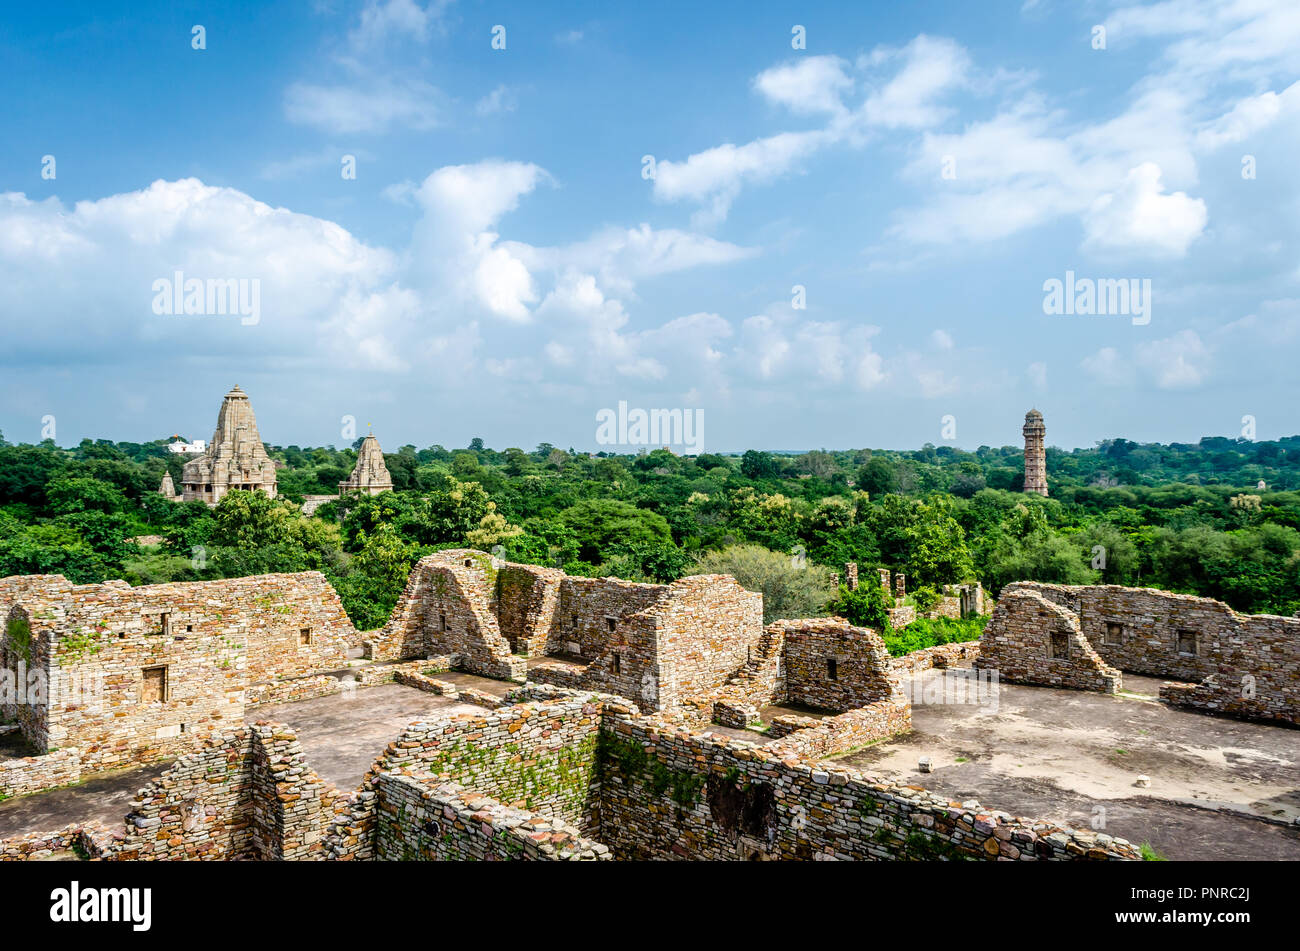 Ruins of Chittorgarh fort, UNESCO world heritage site, India Stock Photo